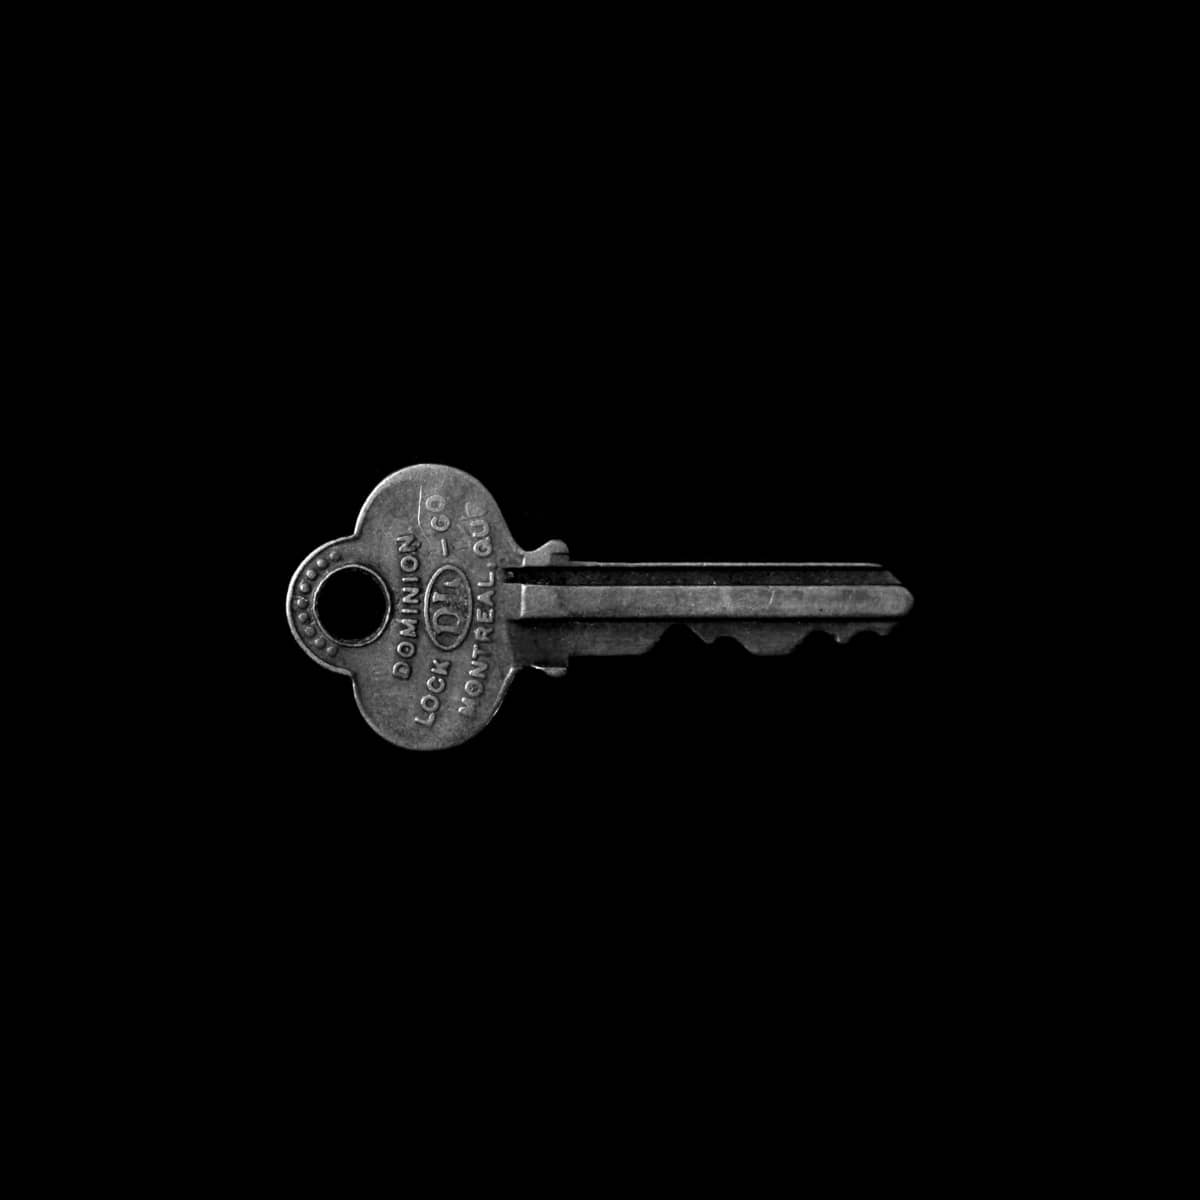 Locksmith Key Cutting Service Keys Cut To Your Code Lost Your Keys 